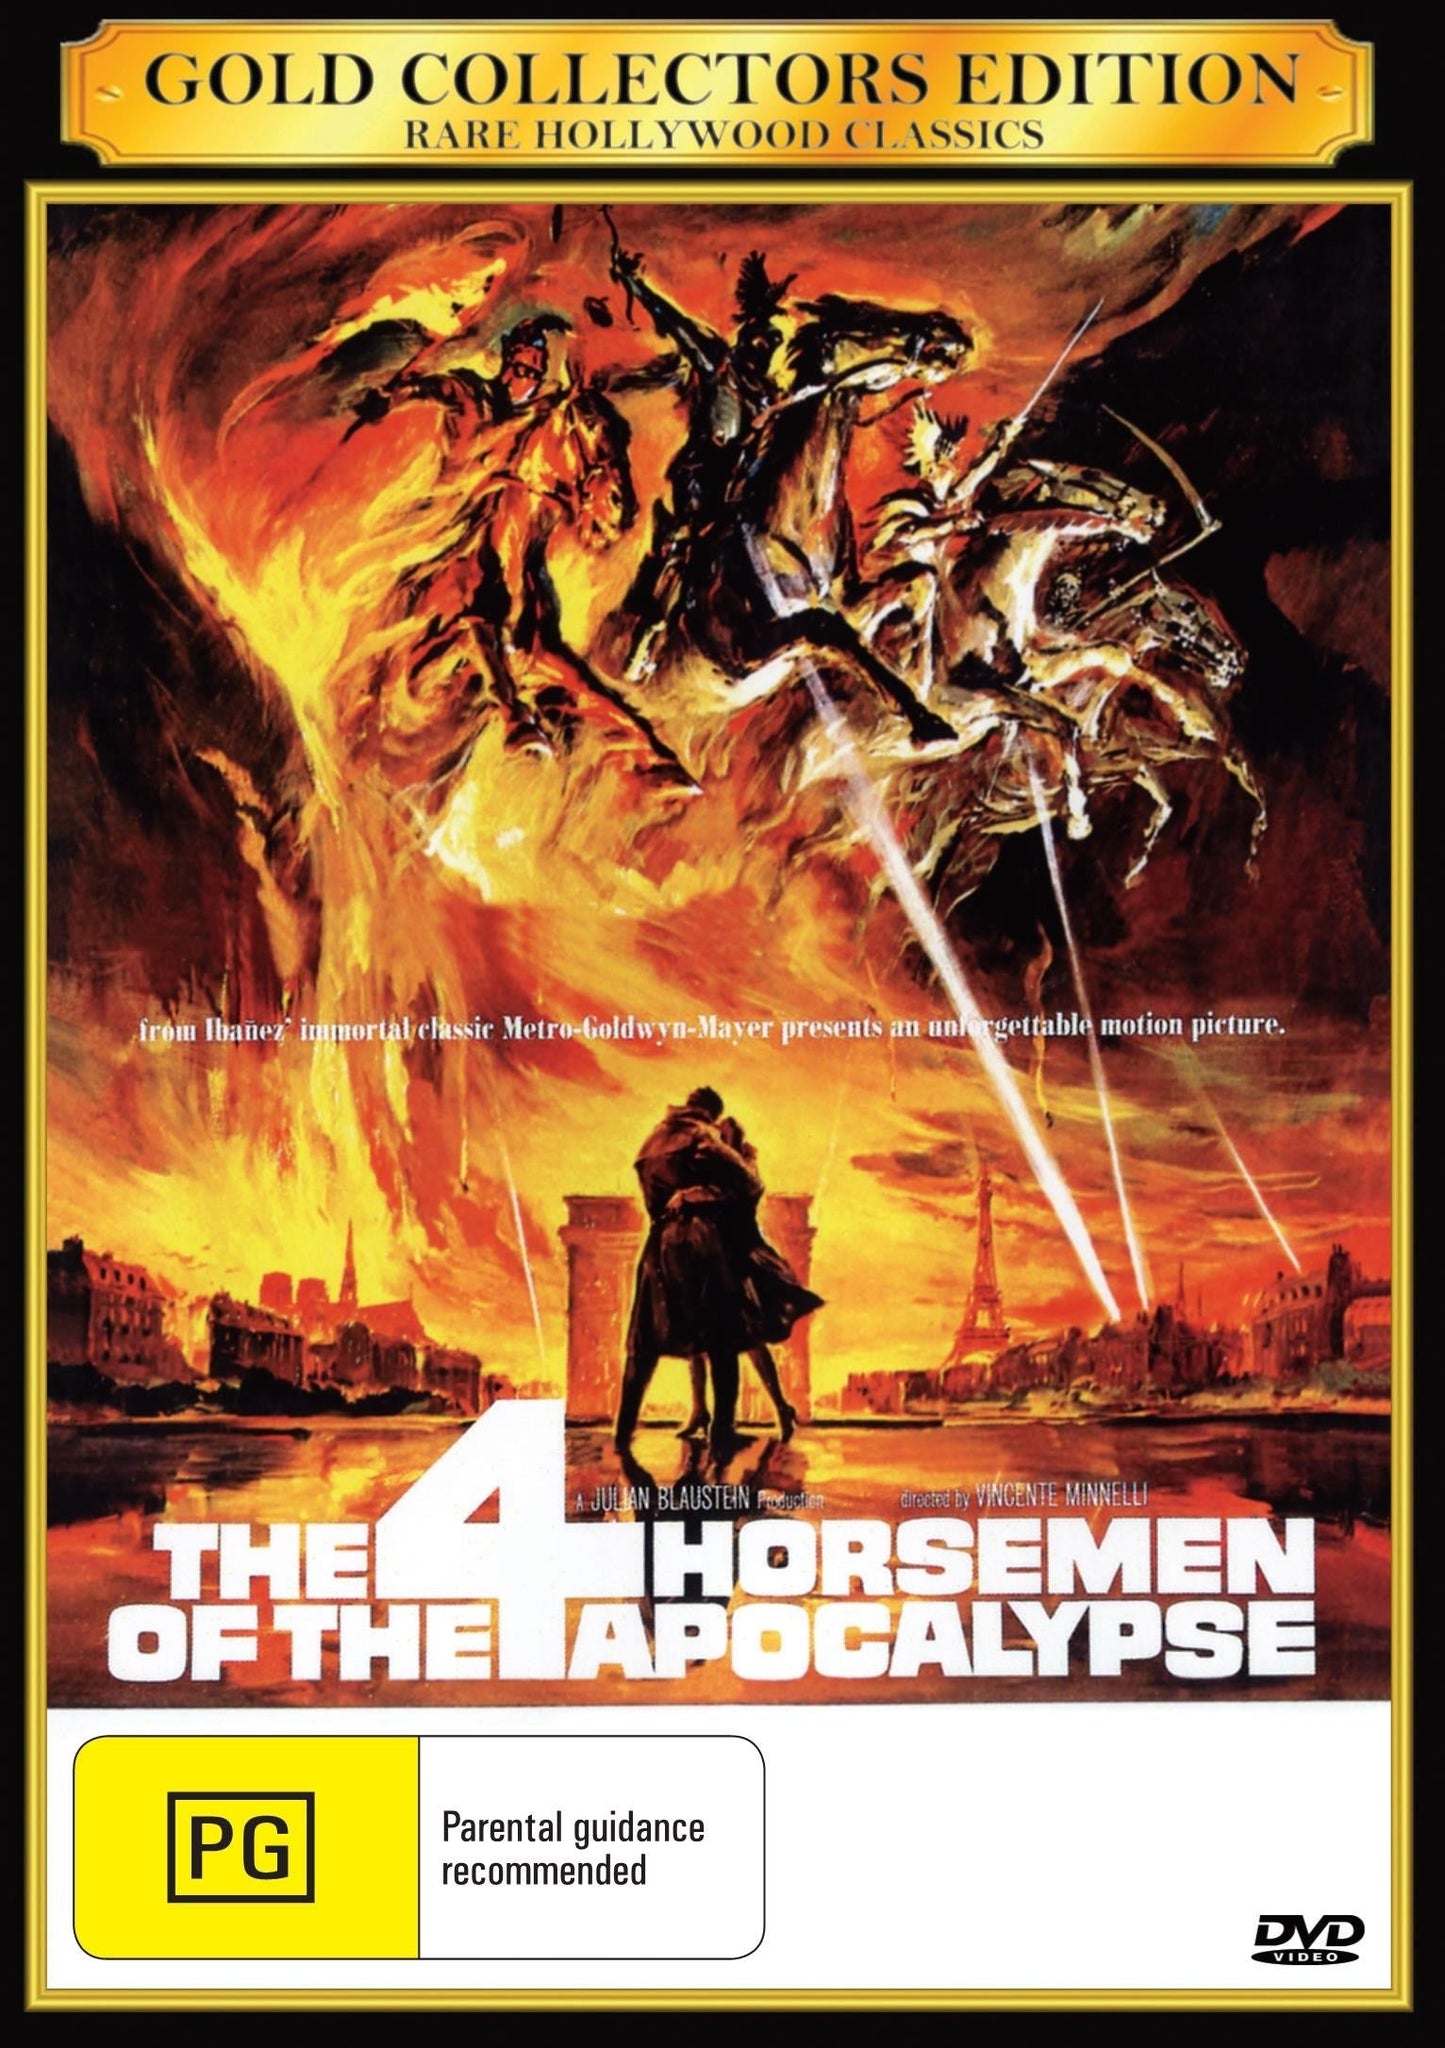 The Four Horsemen Of The Apocalypse rareandcollectibledvds